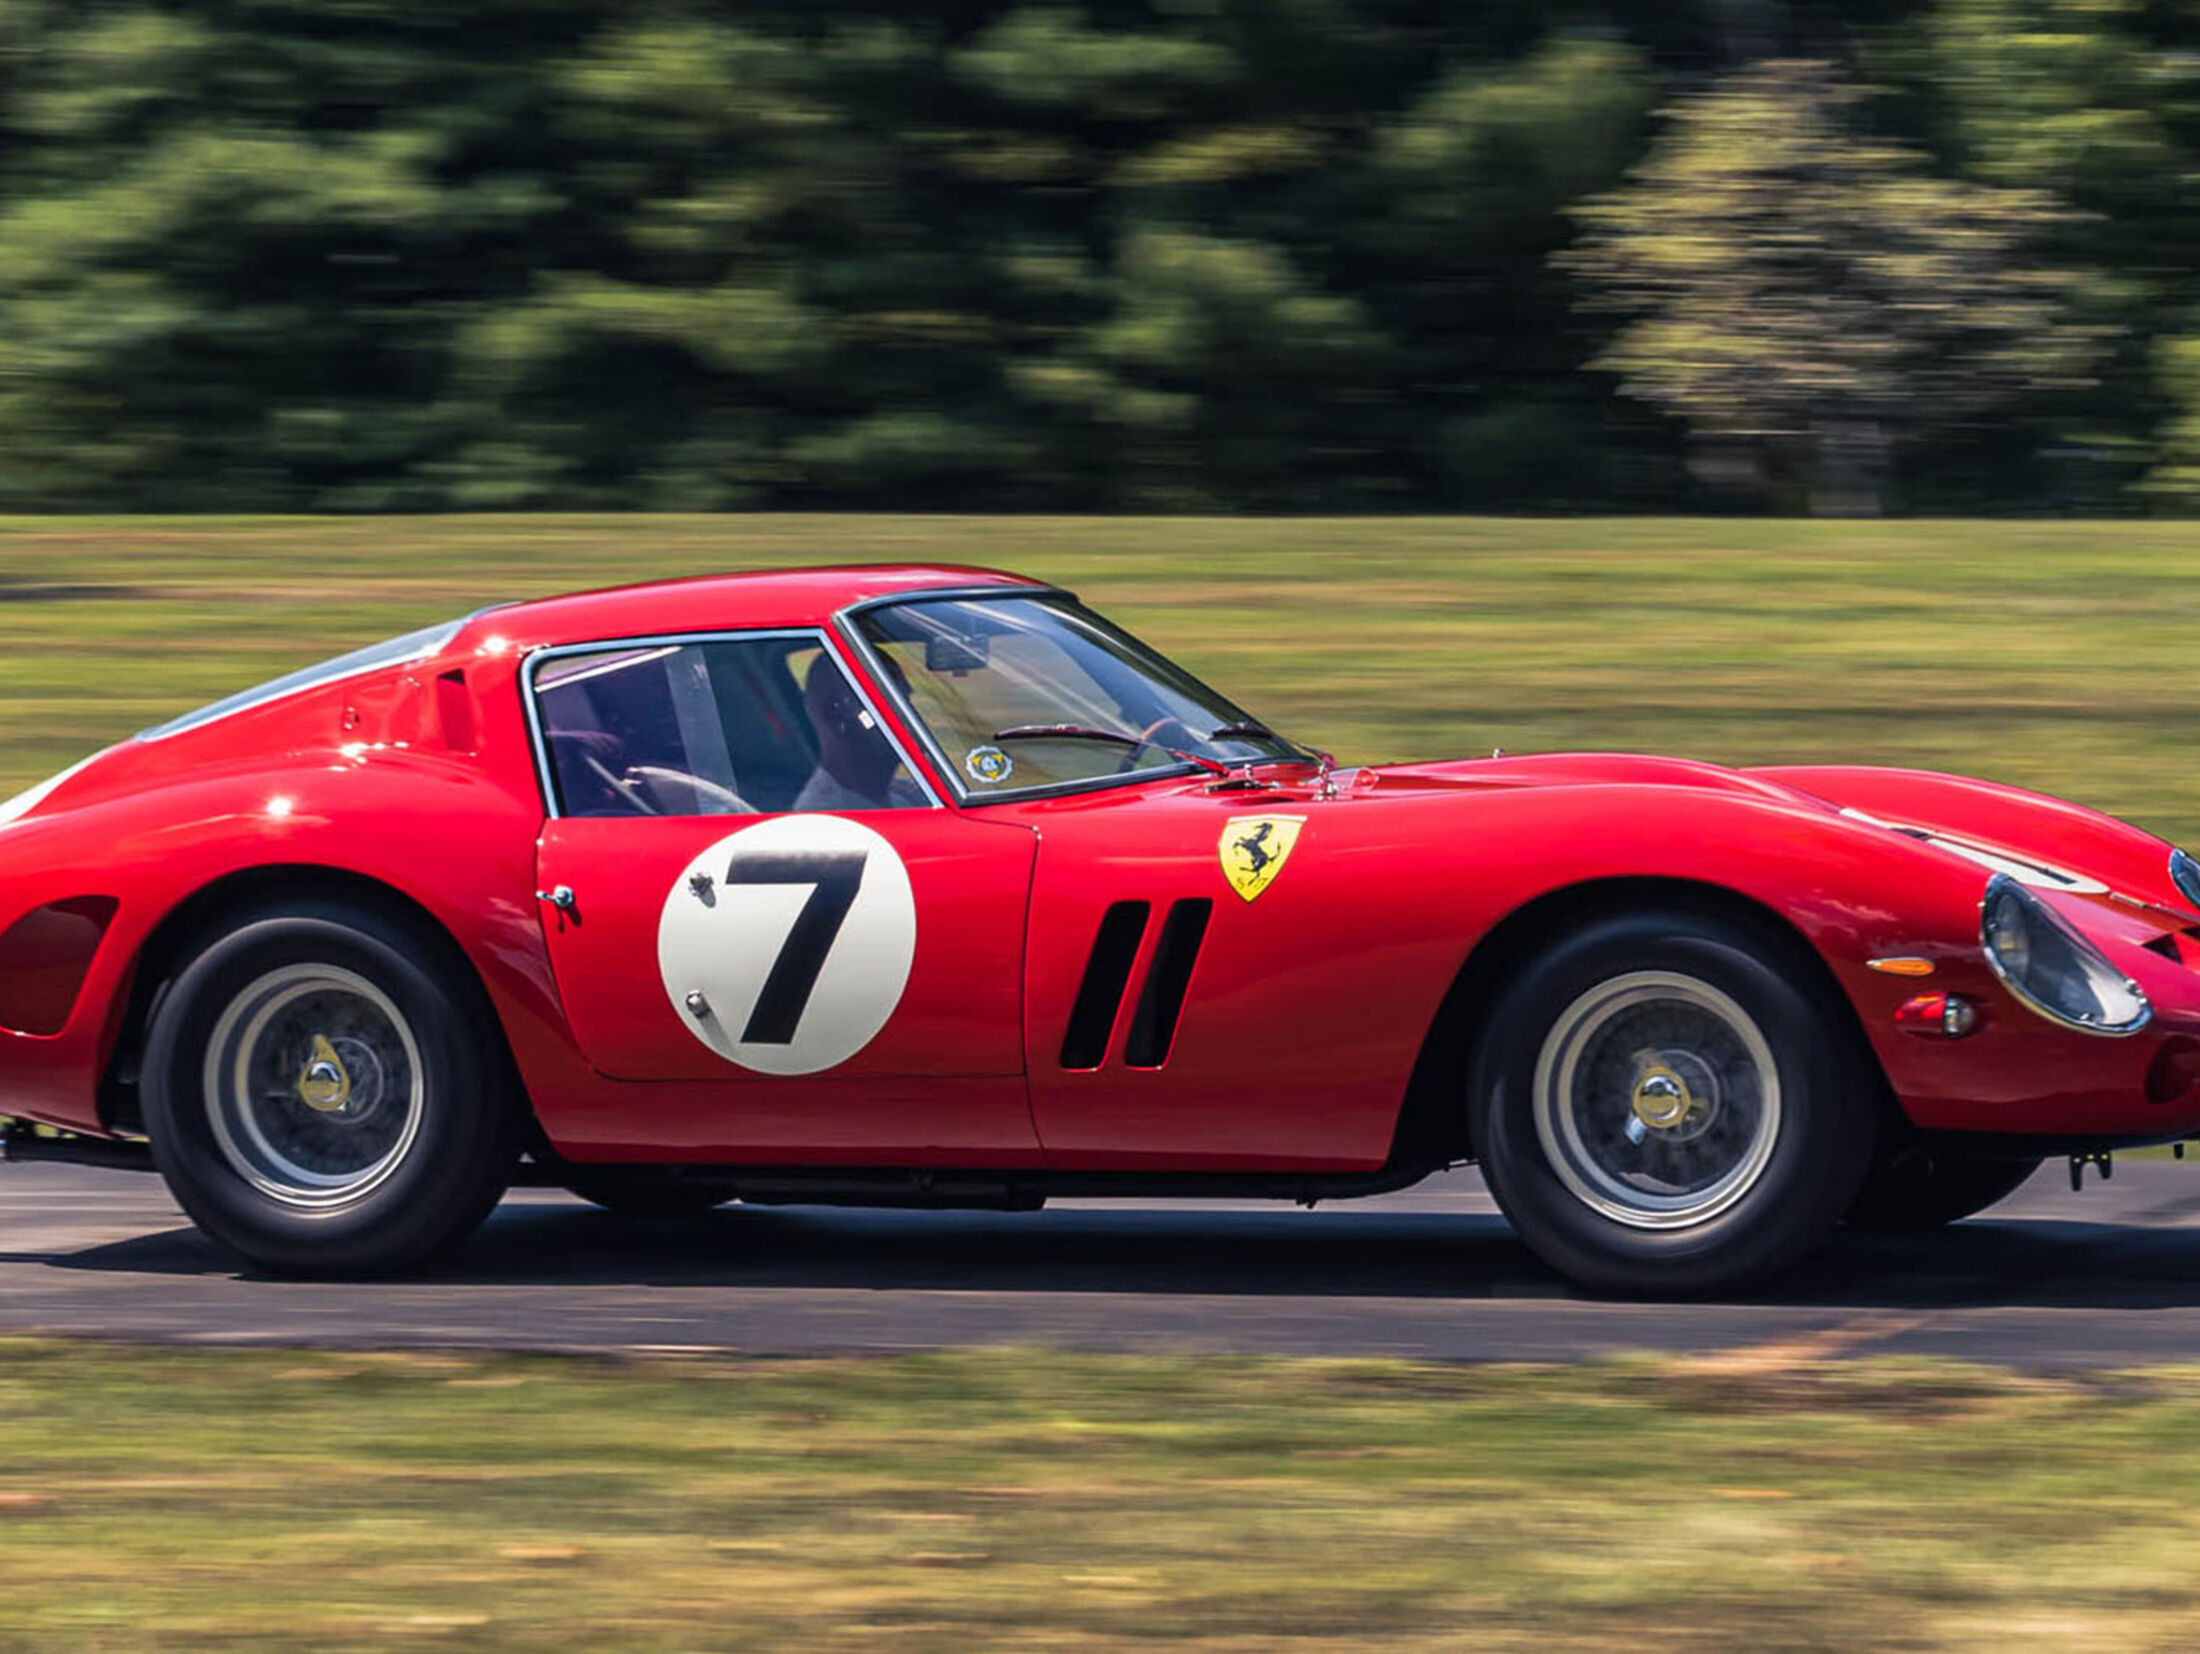 https://imgr1.auto-motor-und-sport.de/Ferrari-330-LM-250-GTO-Scaglietti-1962-Chassis-3765-jsonLd4x3-fbe1410b-2053239.jpg